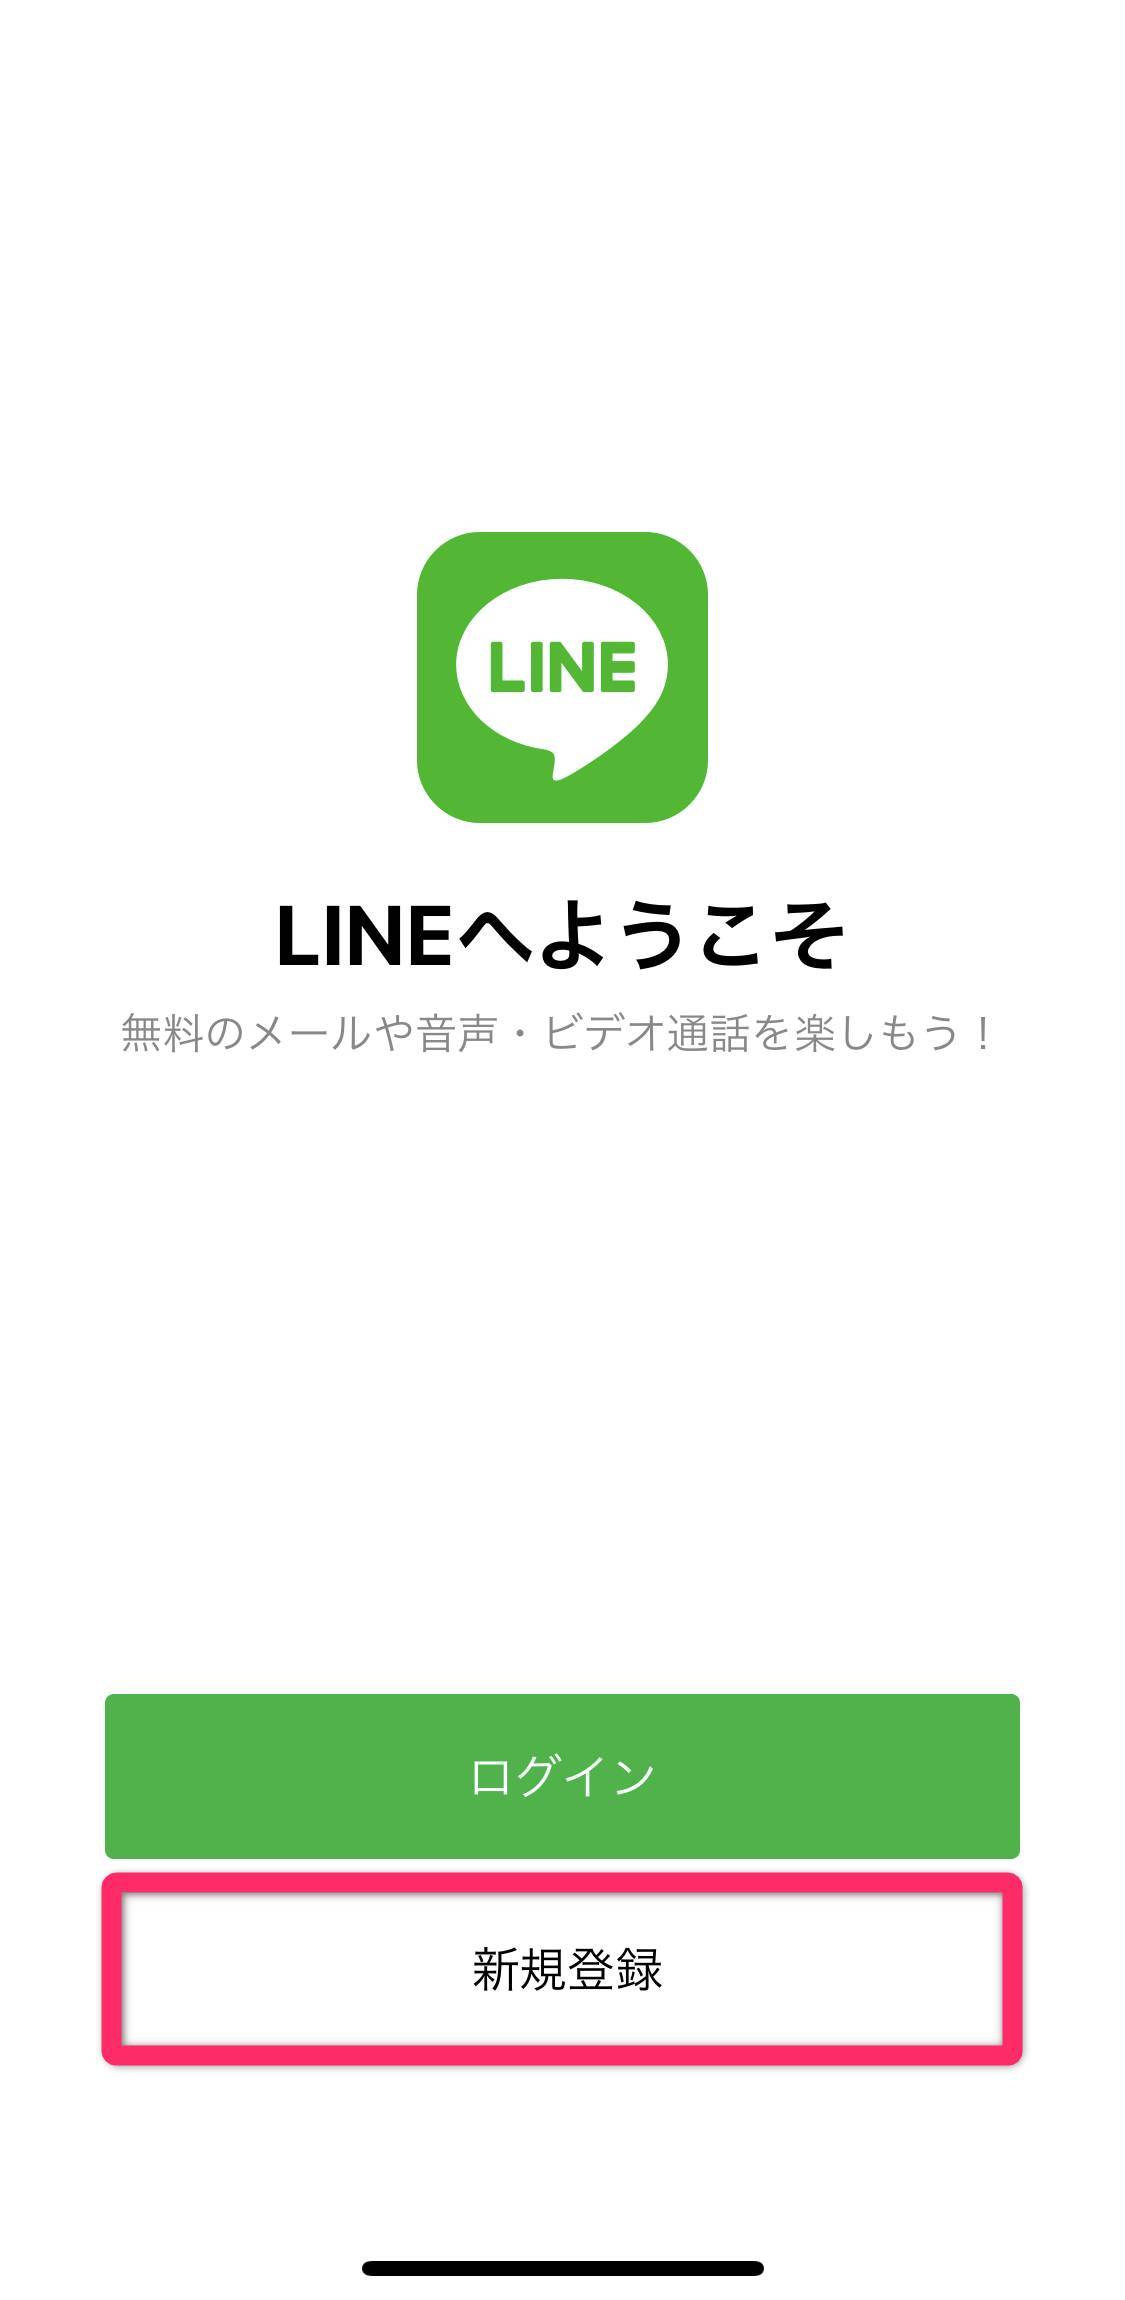 Lineのアカウント作成 新規登録方法をわかりやすく解説 最新版 Appliv Topics